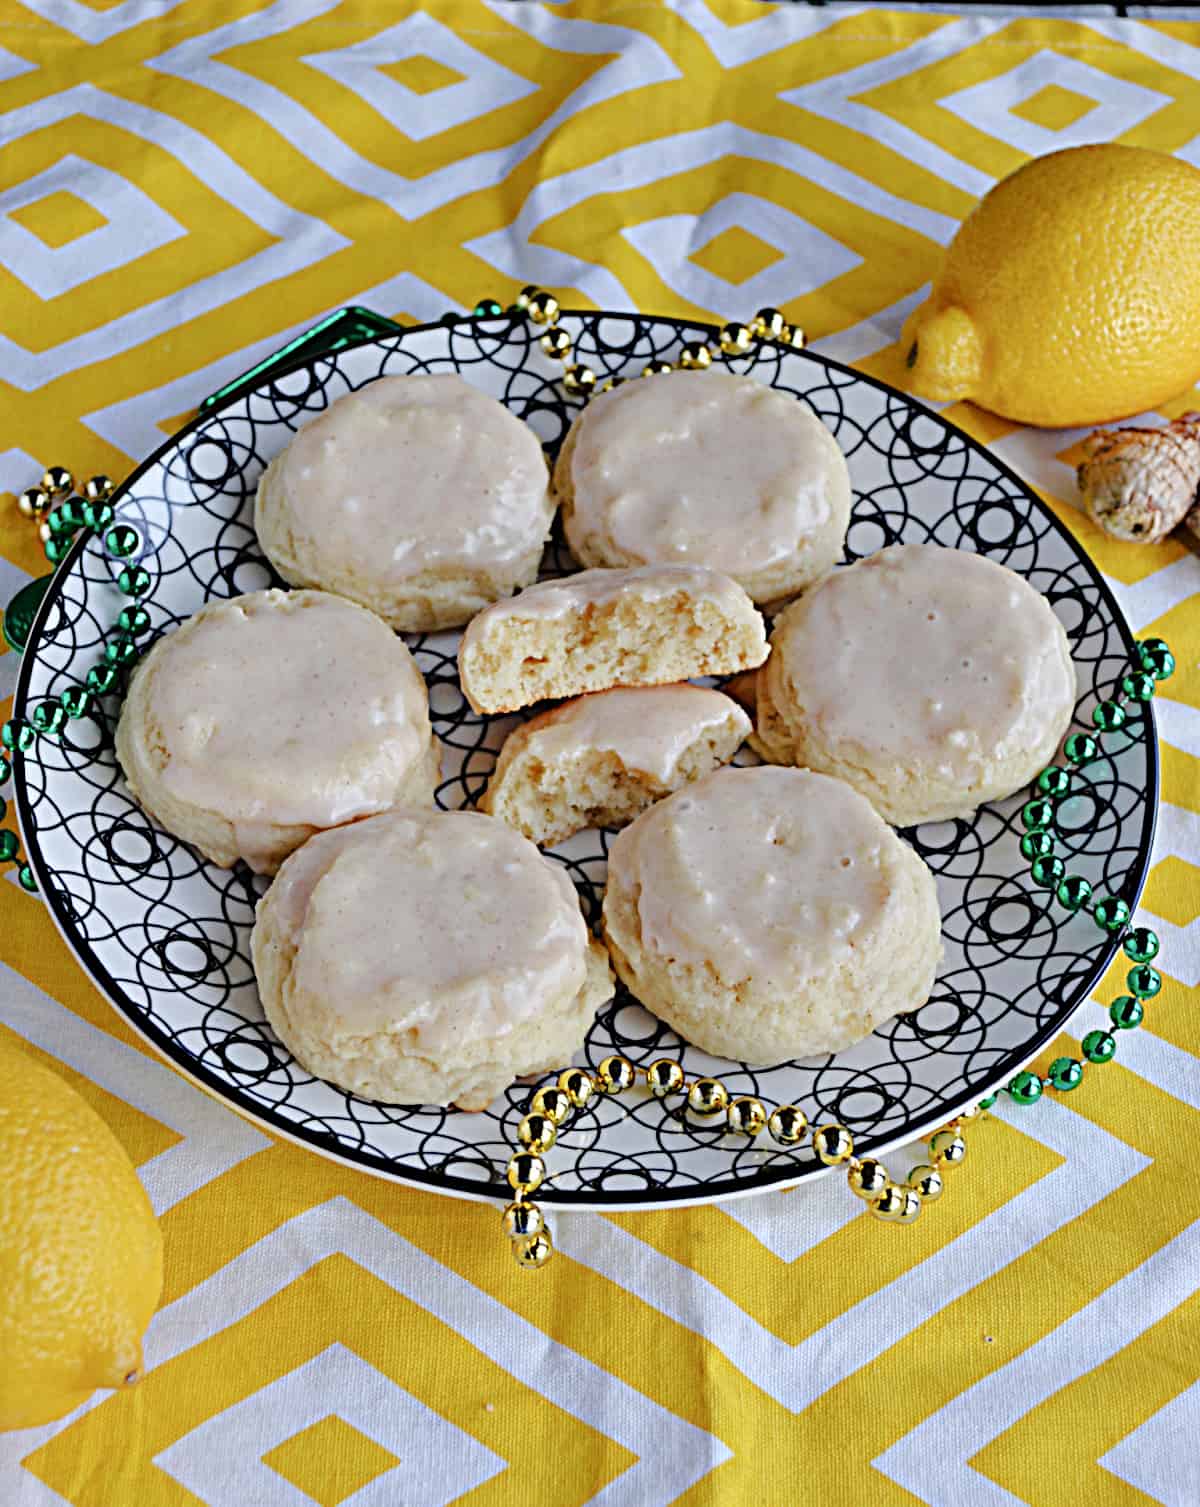 A plate of lemon ginger cookies with one cookie broken in half.